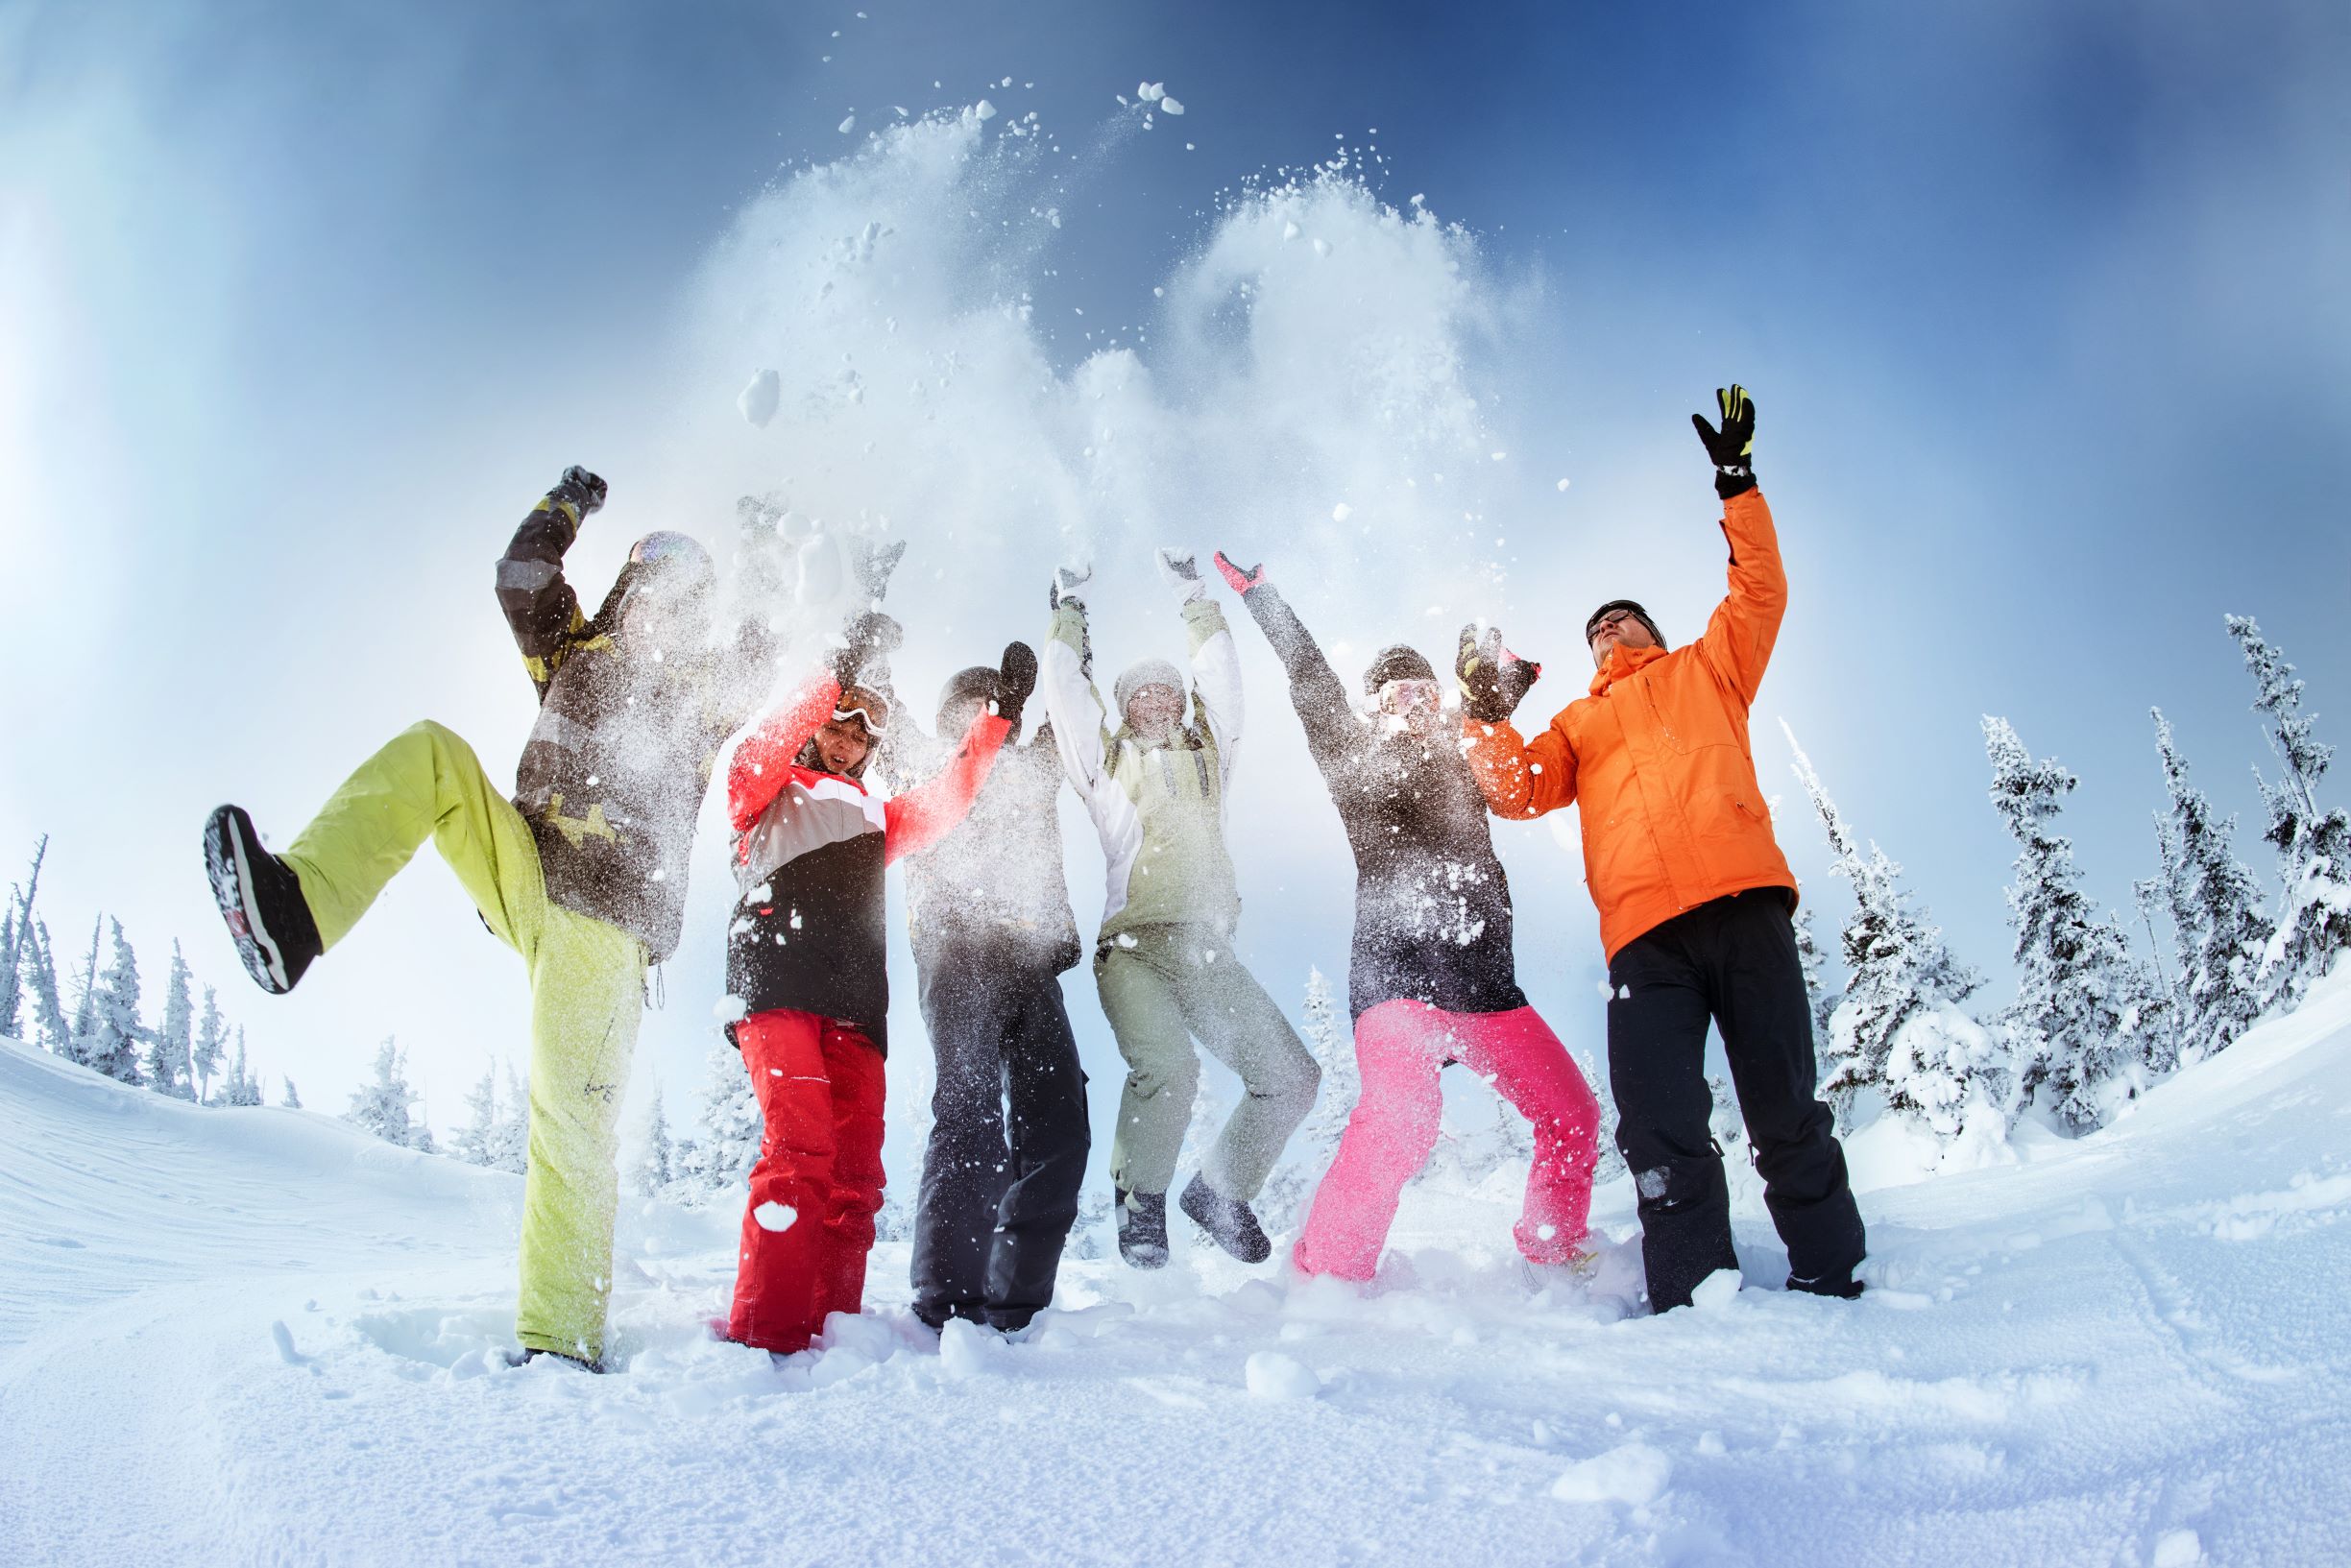 School Group Travel - far more than just a ski trip | Snowscene